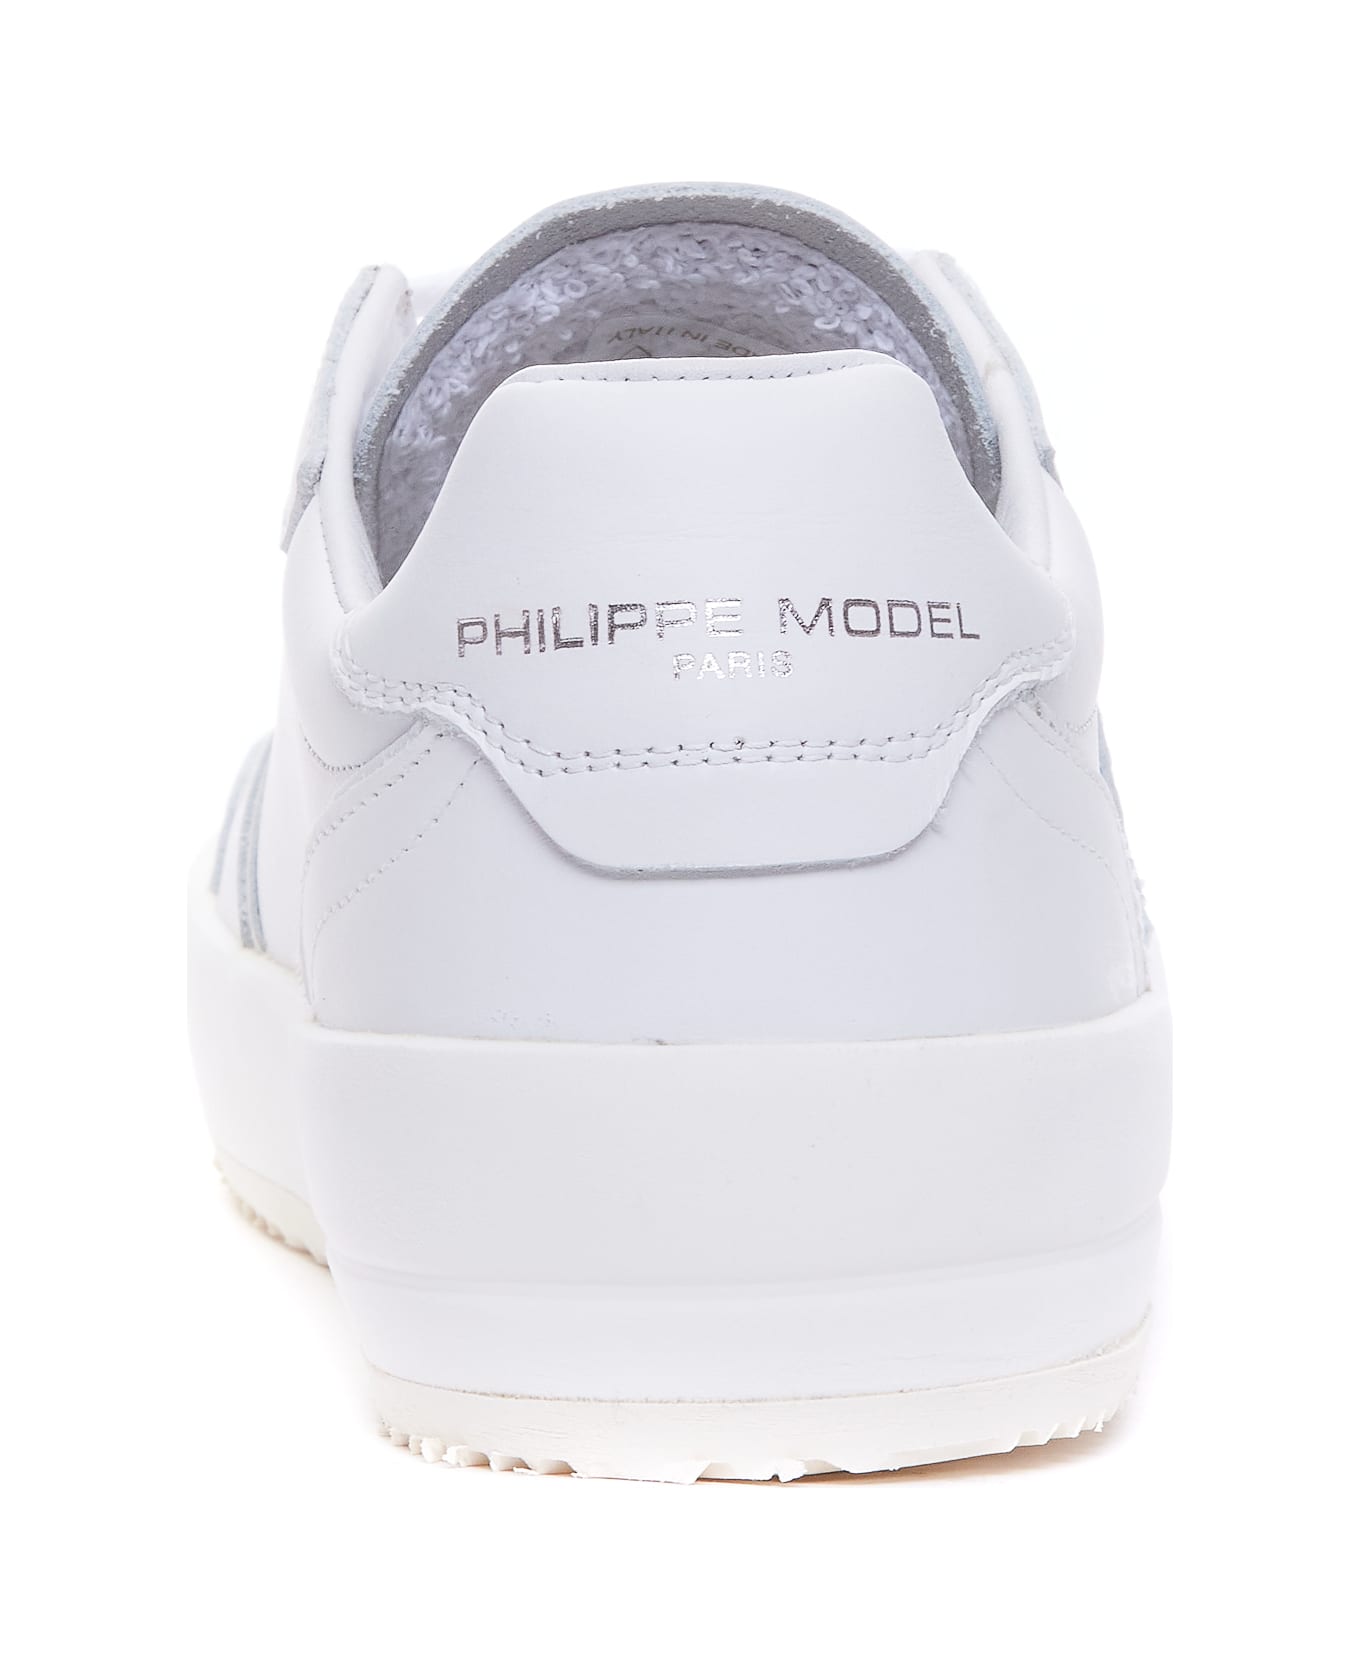 Philippe Model Nice Low Sneakers - Veau blanc